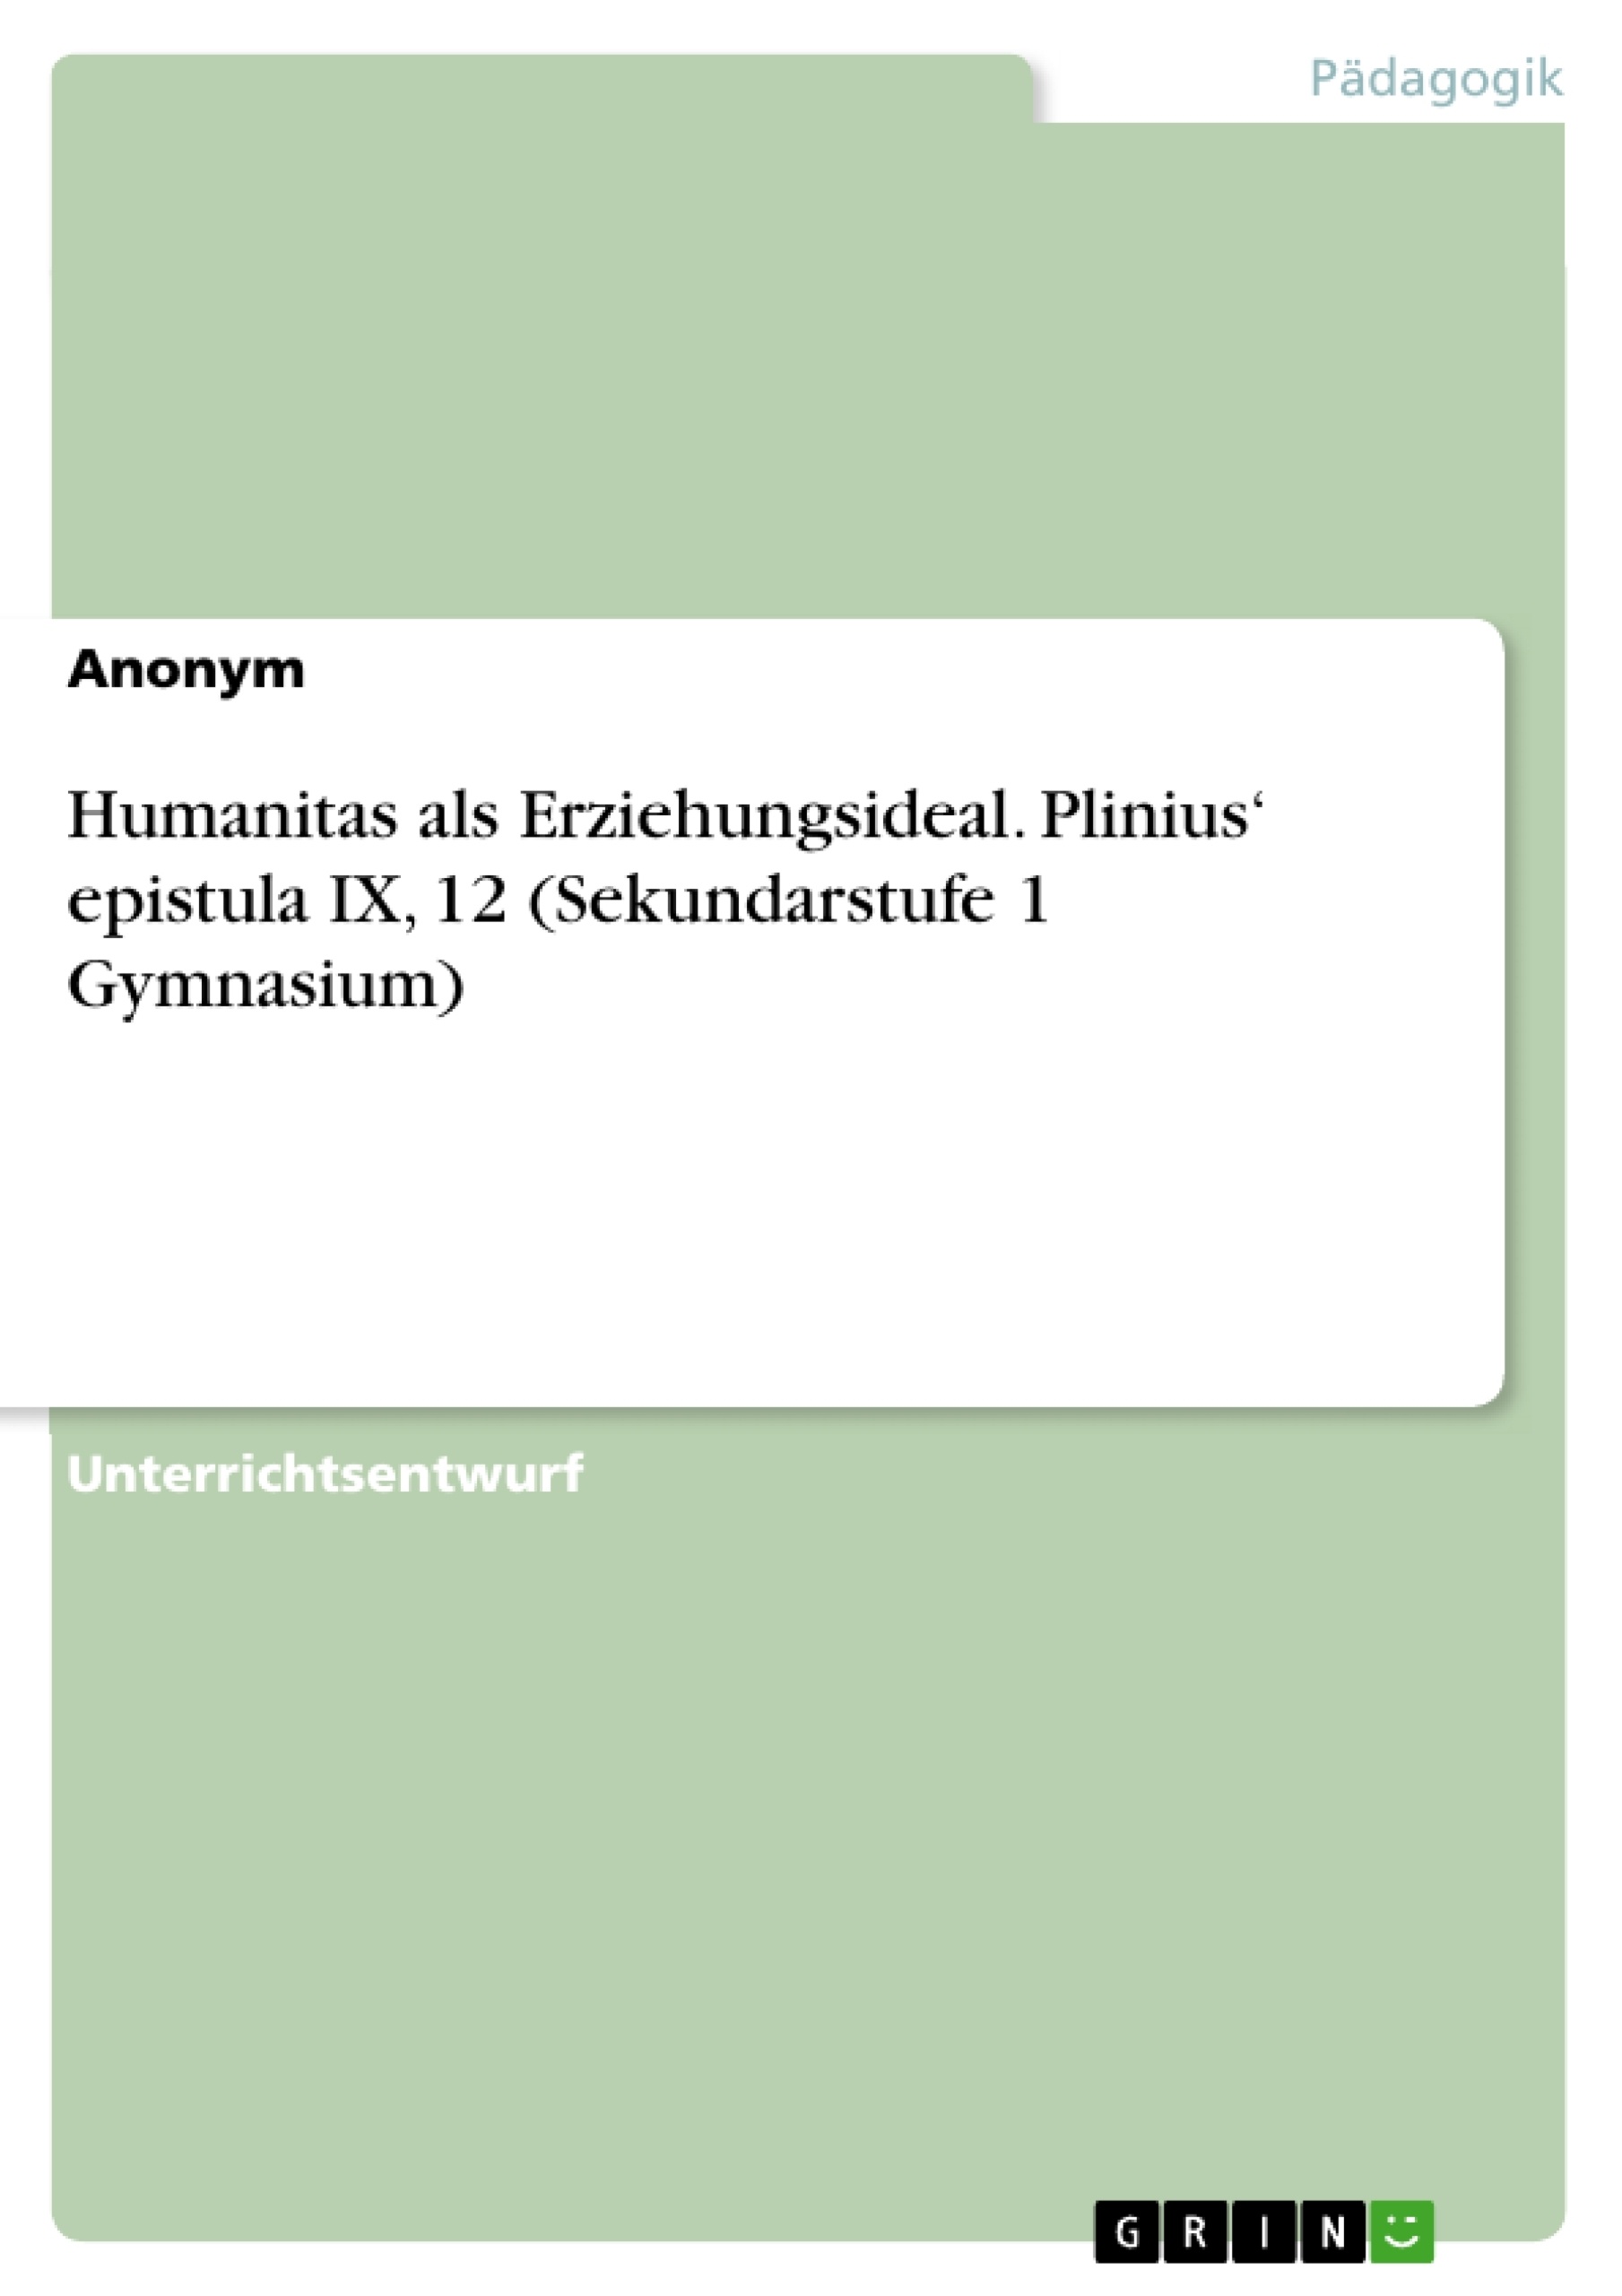 Title: Humanitas als Erziehungsideal. Plinius‘ epistula IX, 12 (Sekundarstufe 1 Gymnasium)